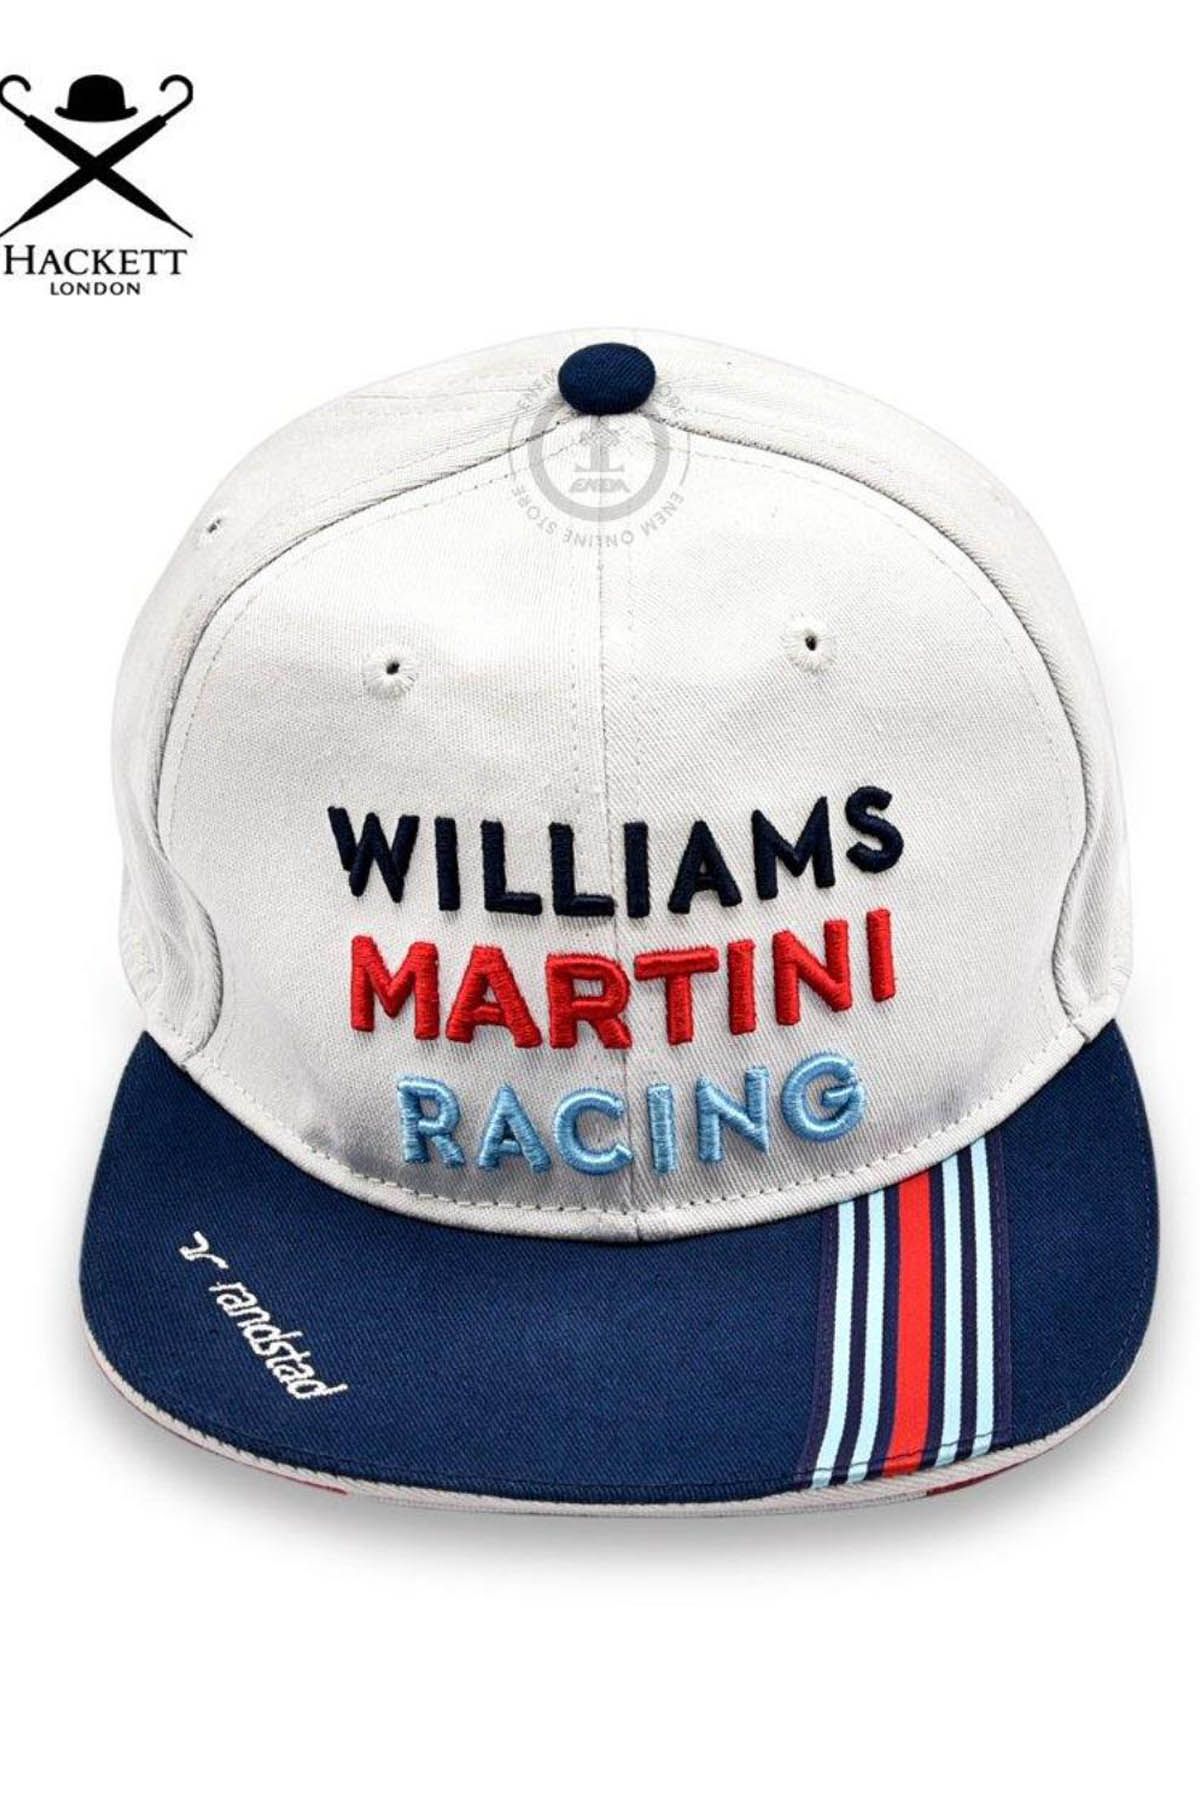 Hackett Mens P-Cap Williams Martini Emb.HM041741